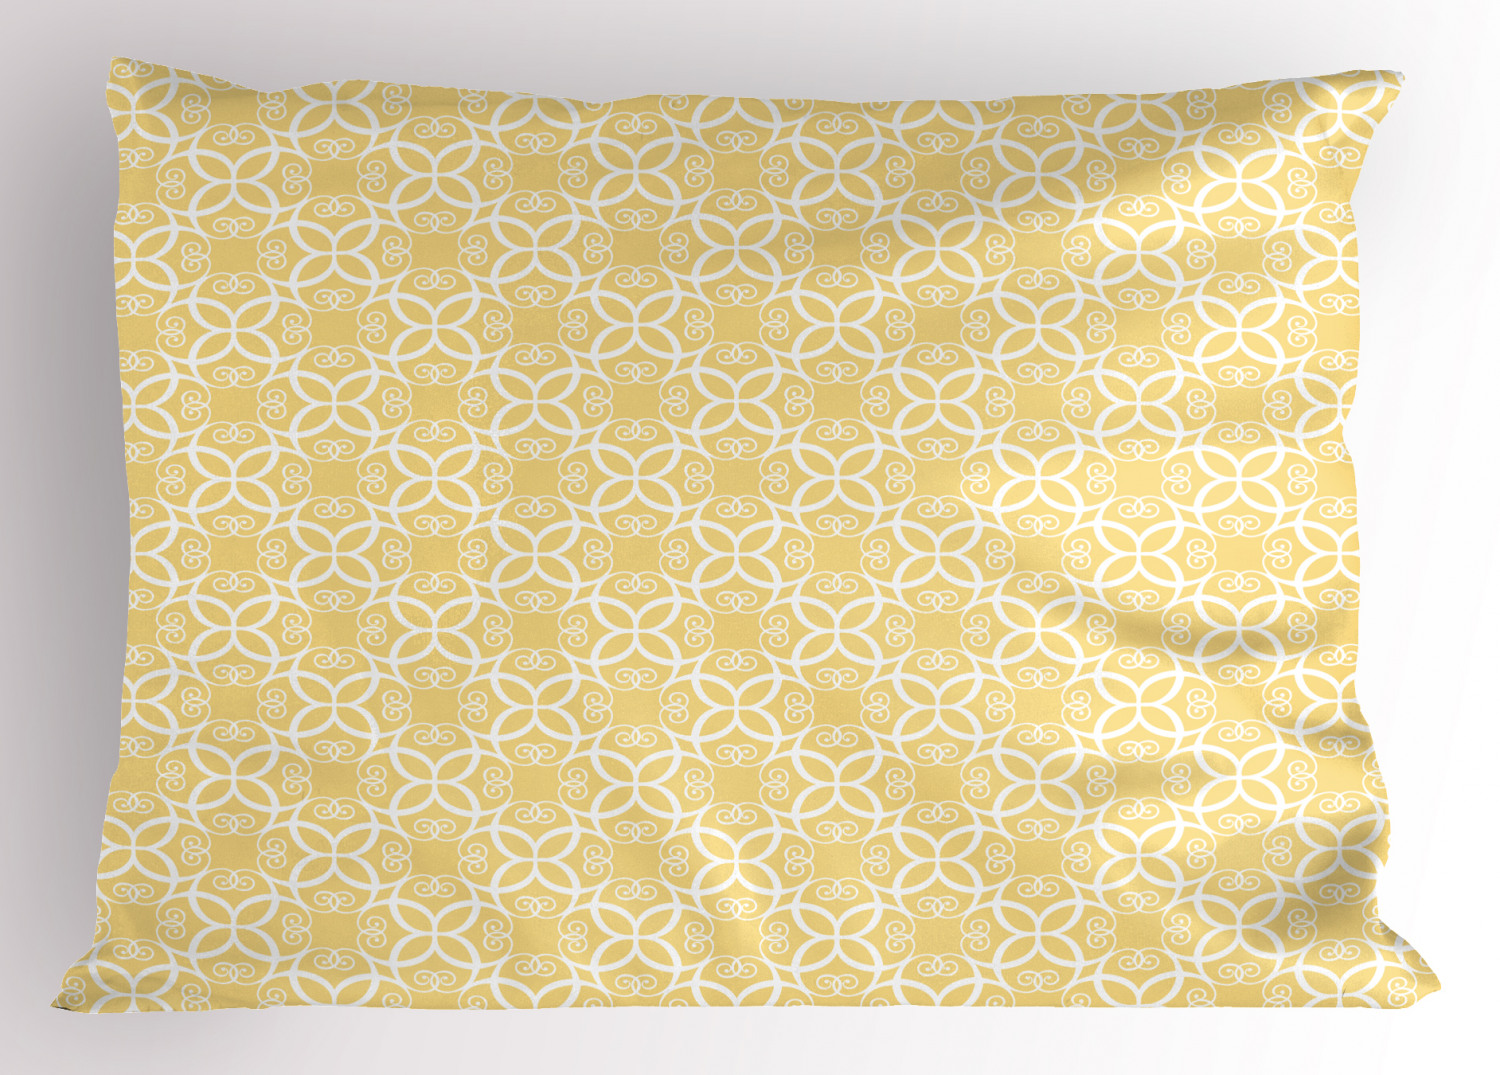 White and Yellow Pillow Sham Decorative Pillowcase 3 Sizes Bedroom Decoration 